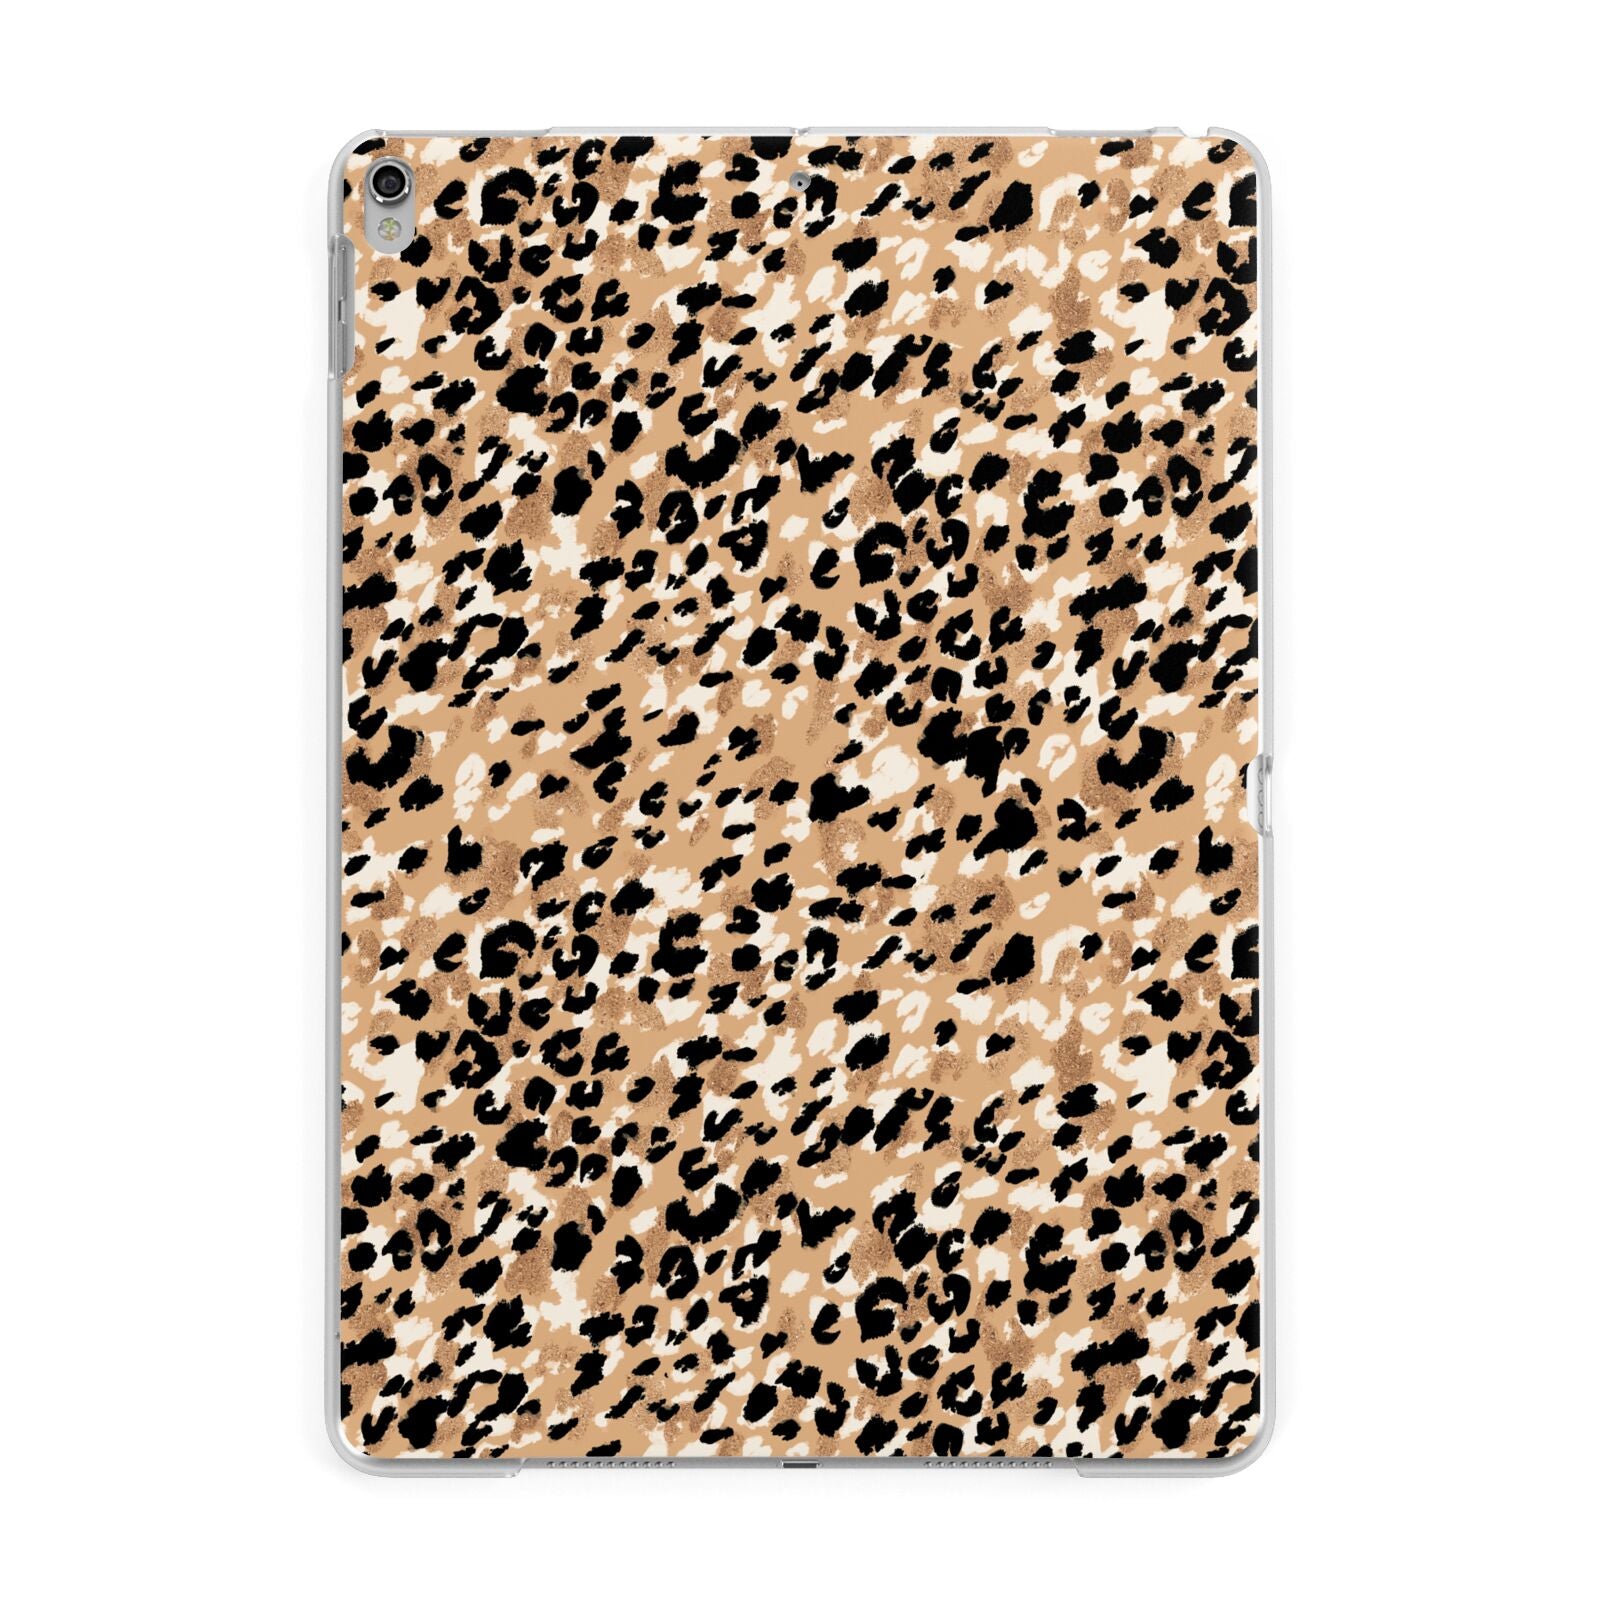 Leopard Print Apple iPad Silver Case